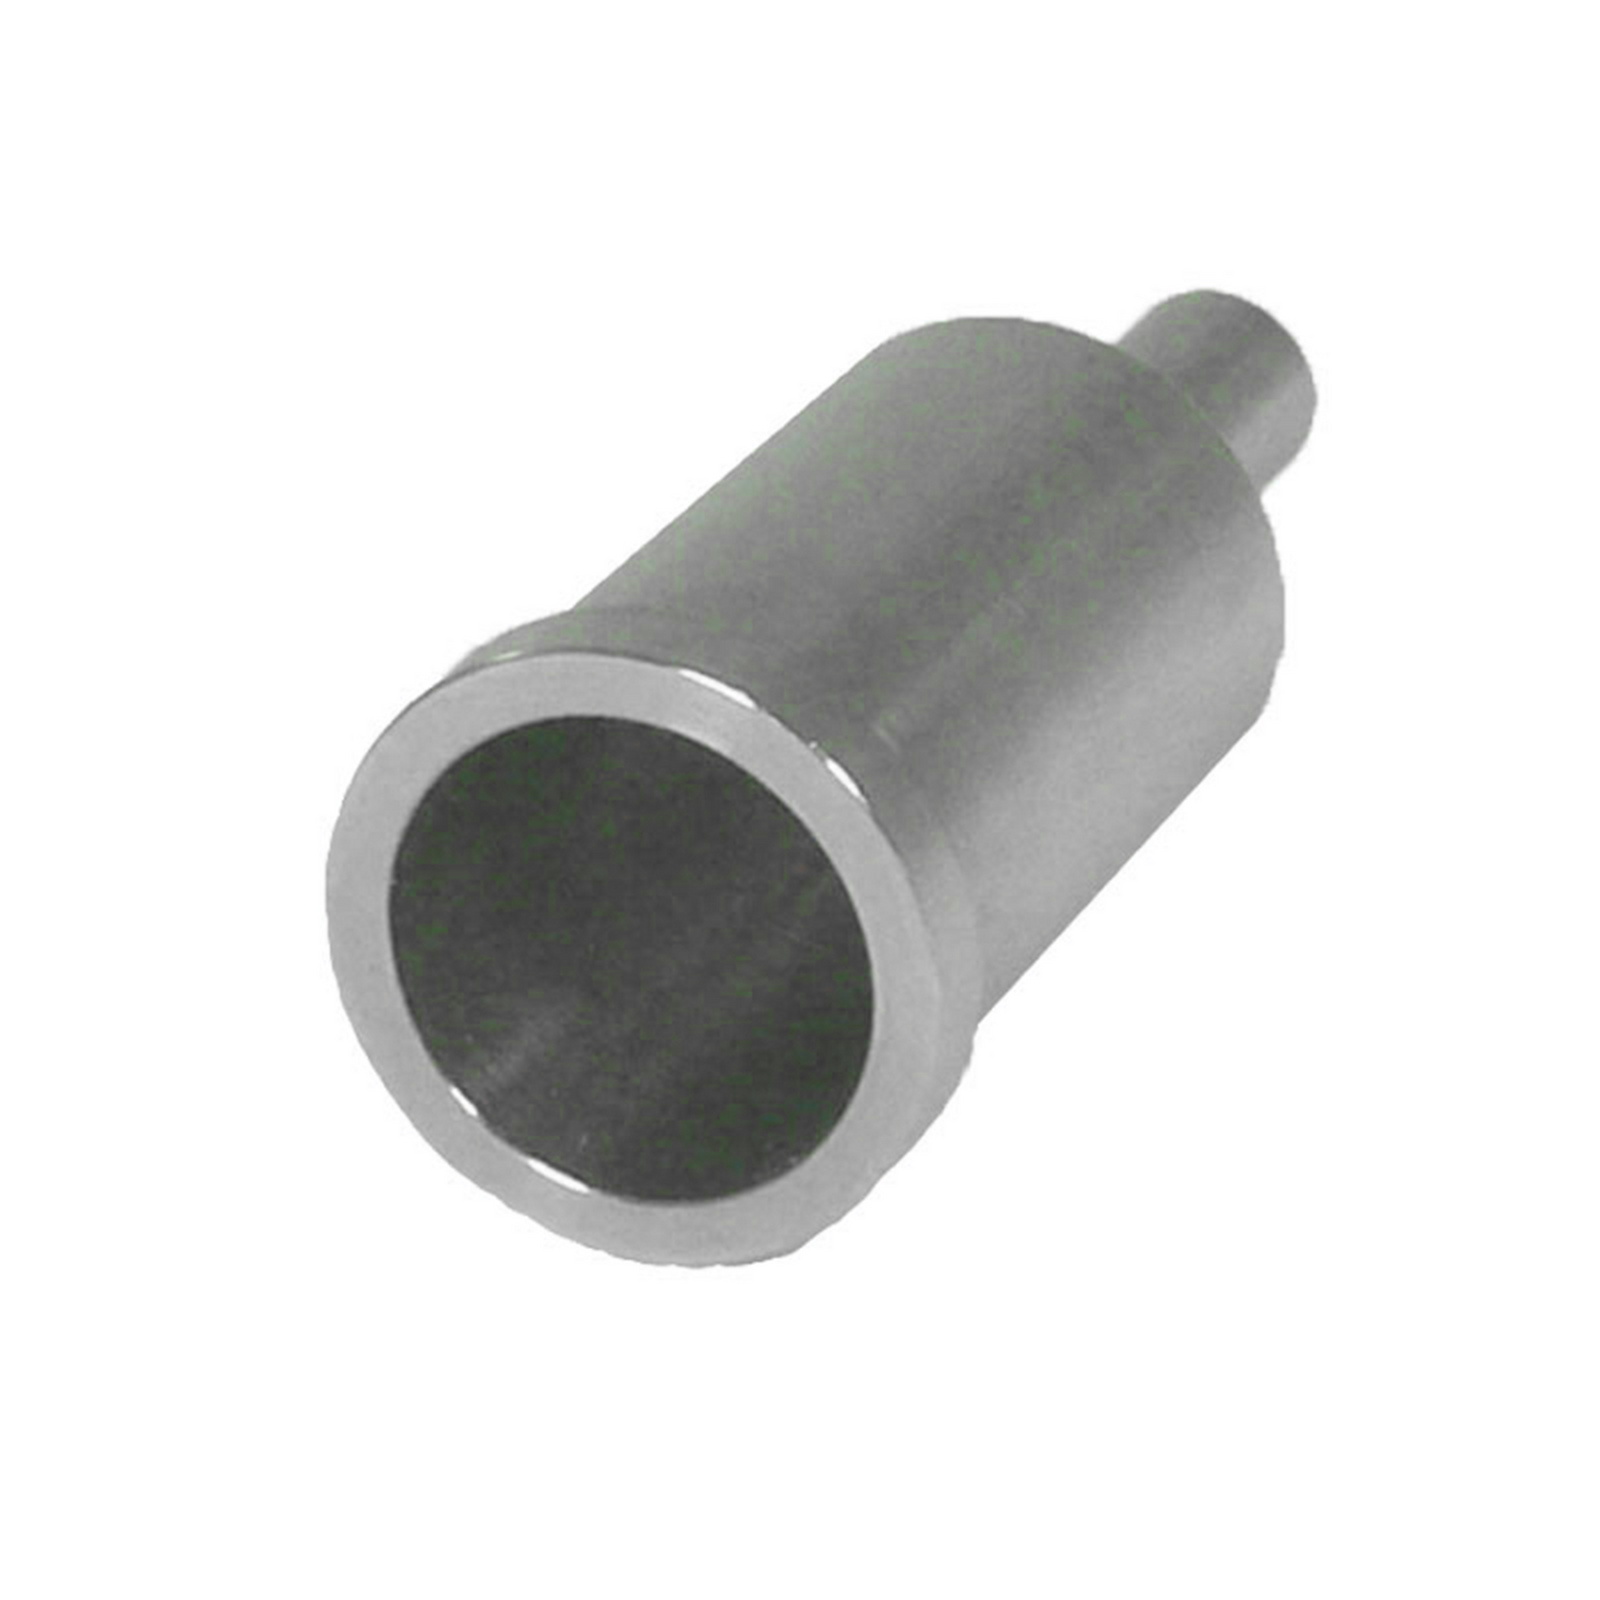 8mm dispensing nozzle filling tip